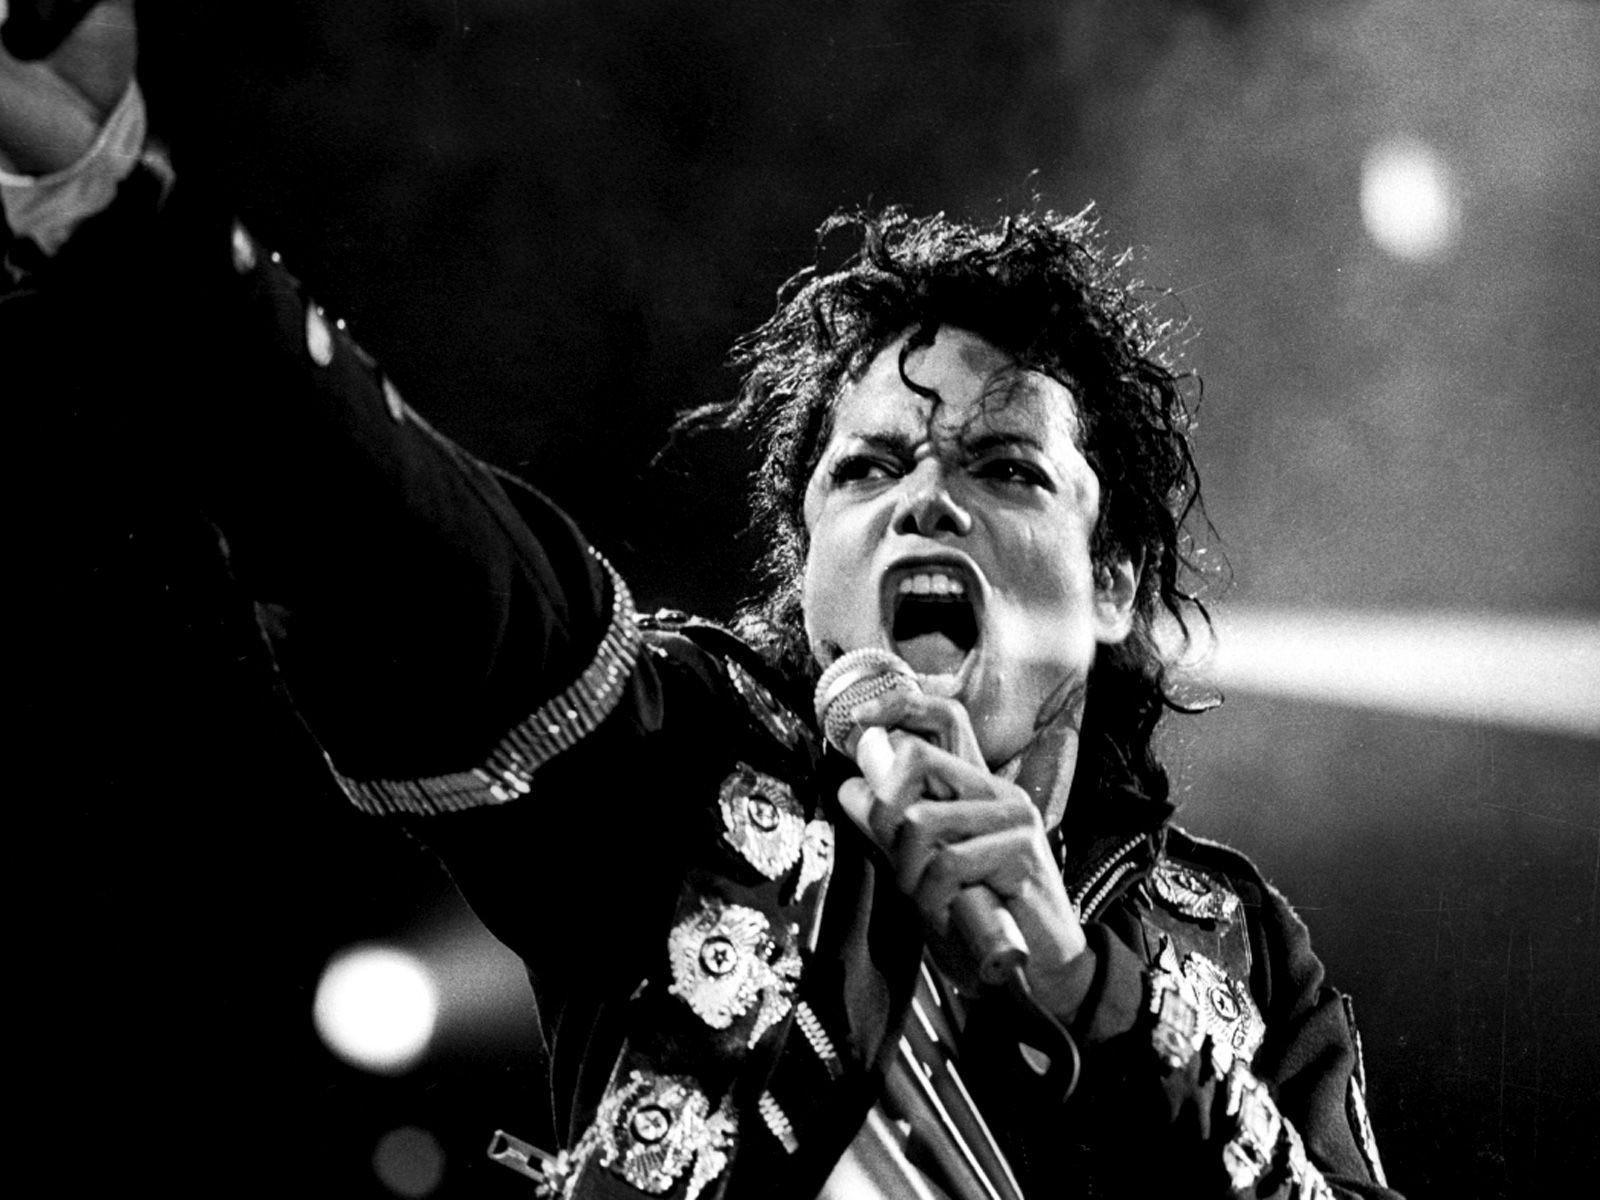 MJ fondos de pantalla - Michael Jackson fondo de pantalla (31128130) - fanpop